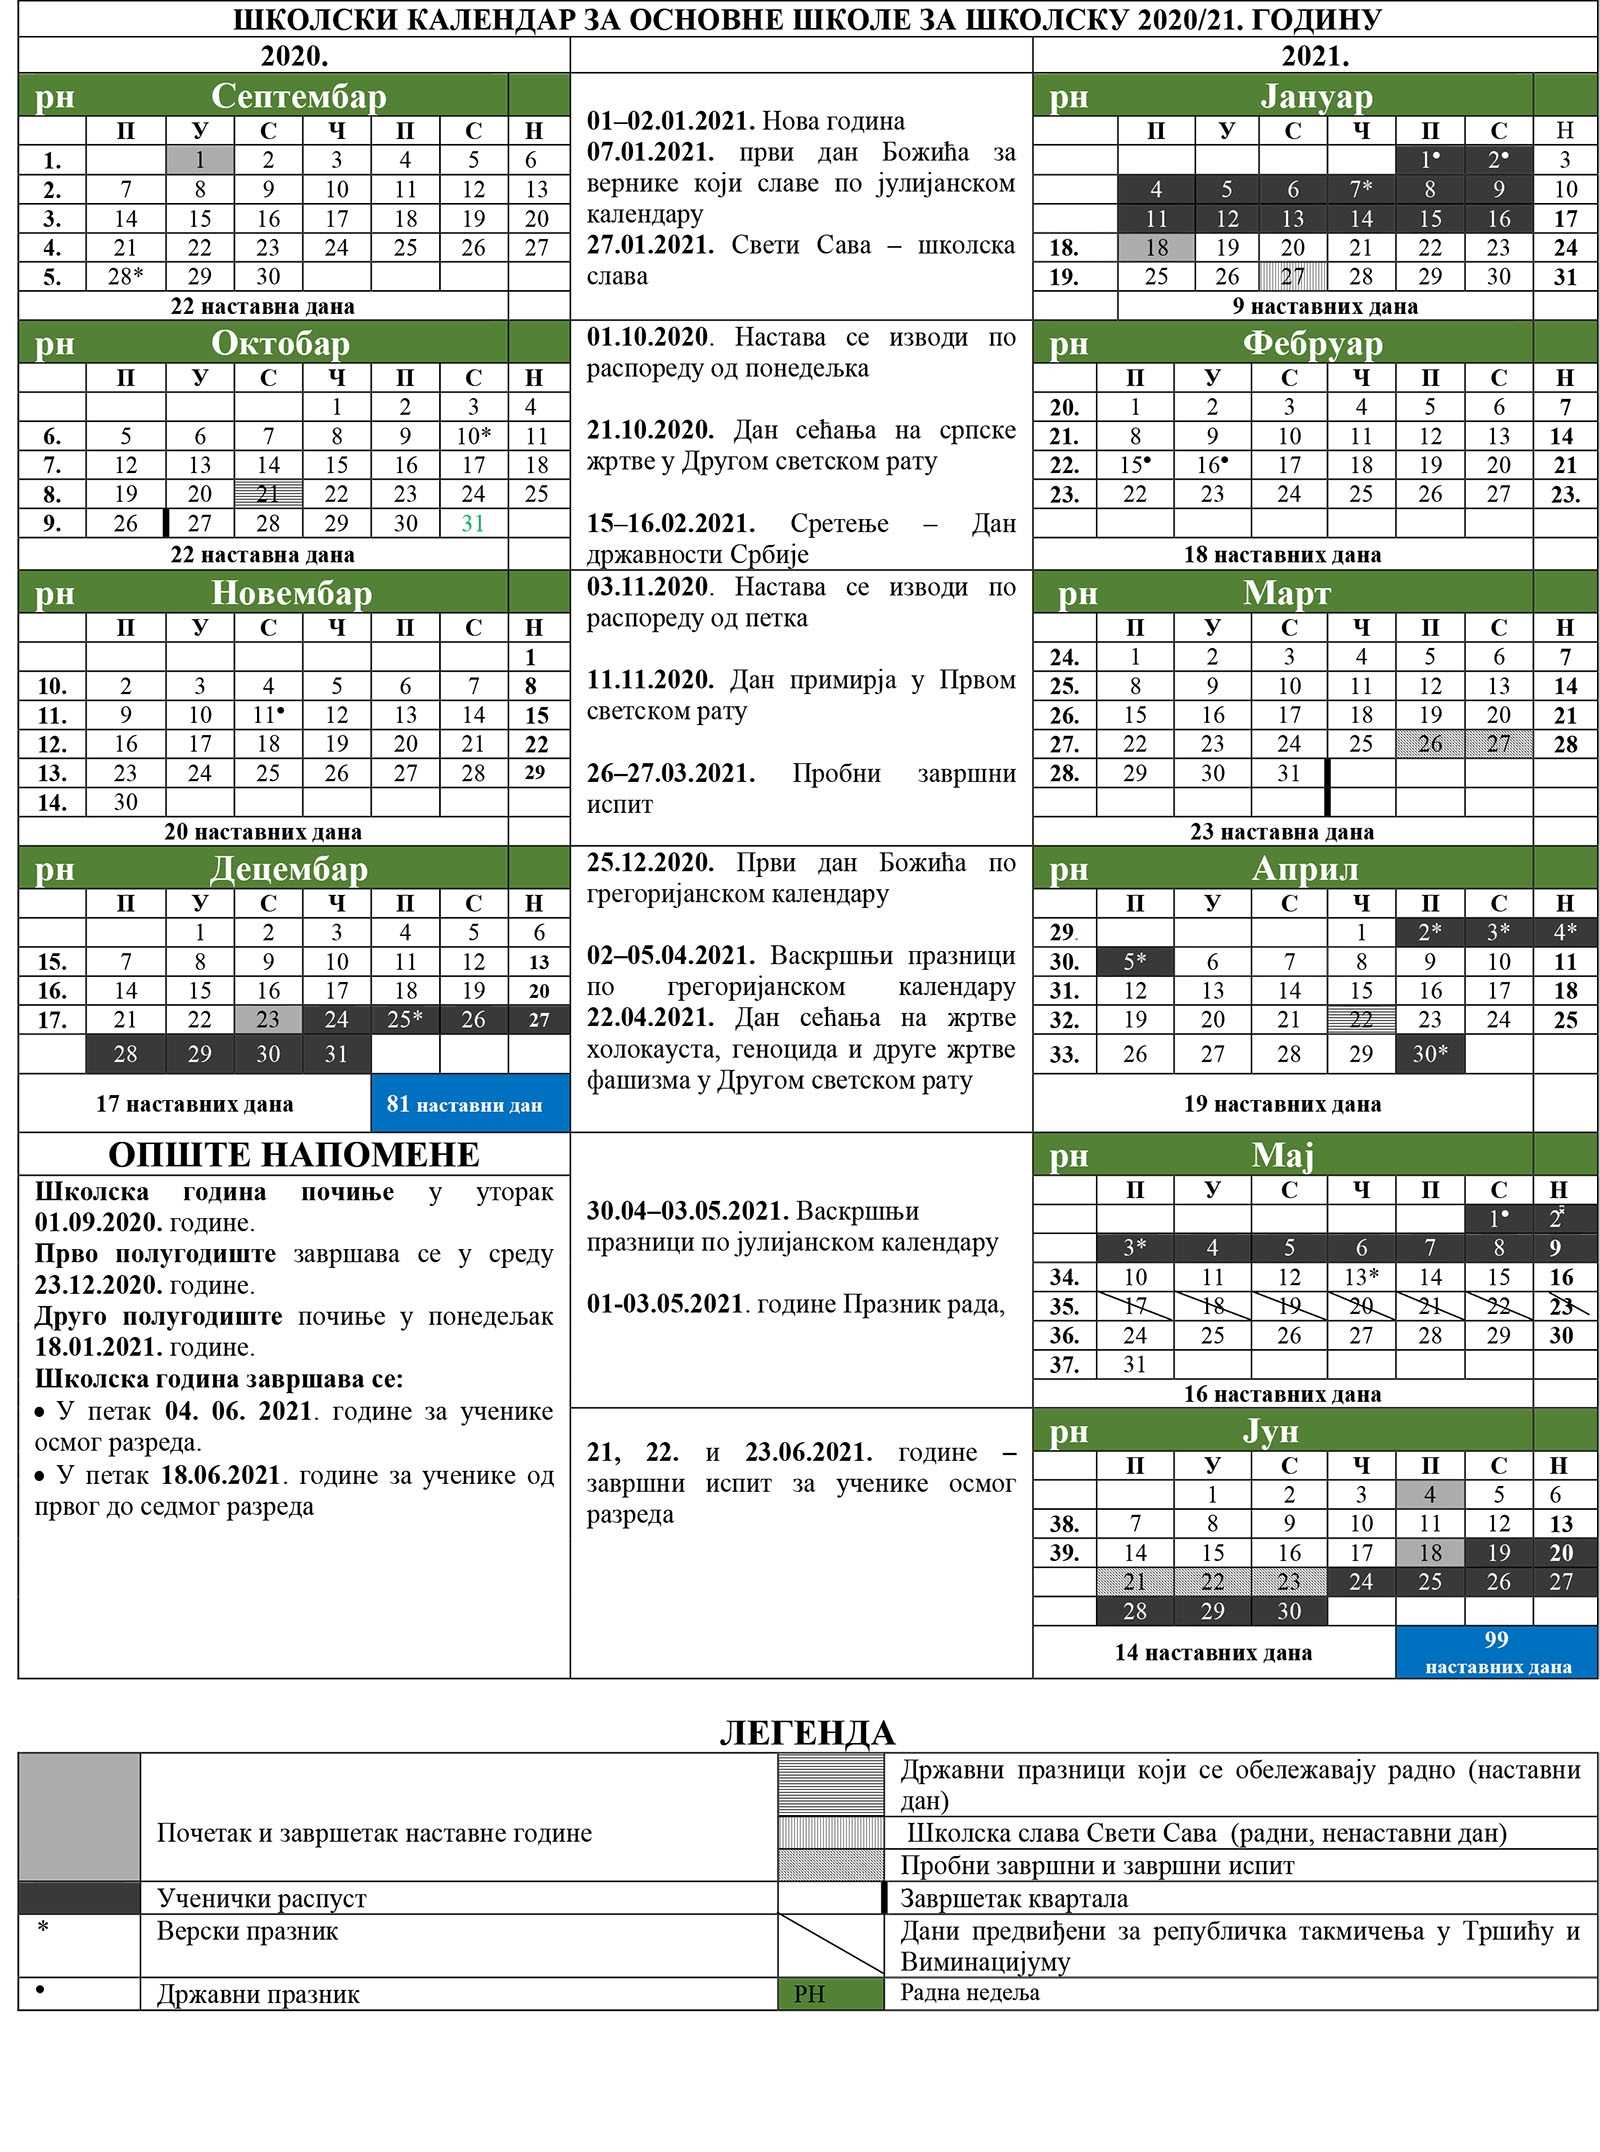 kalendar tabela 2020 2021